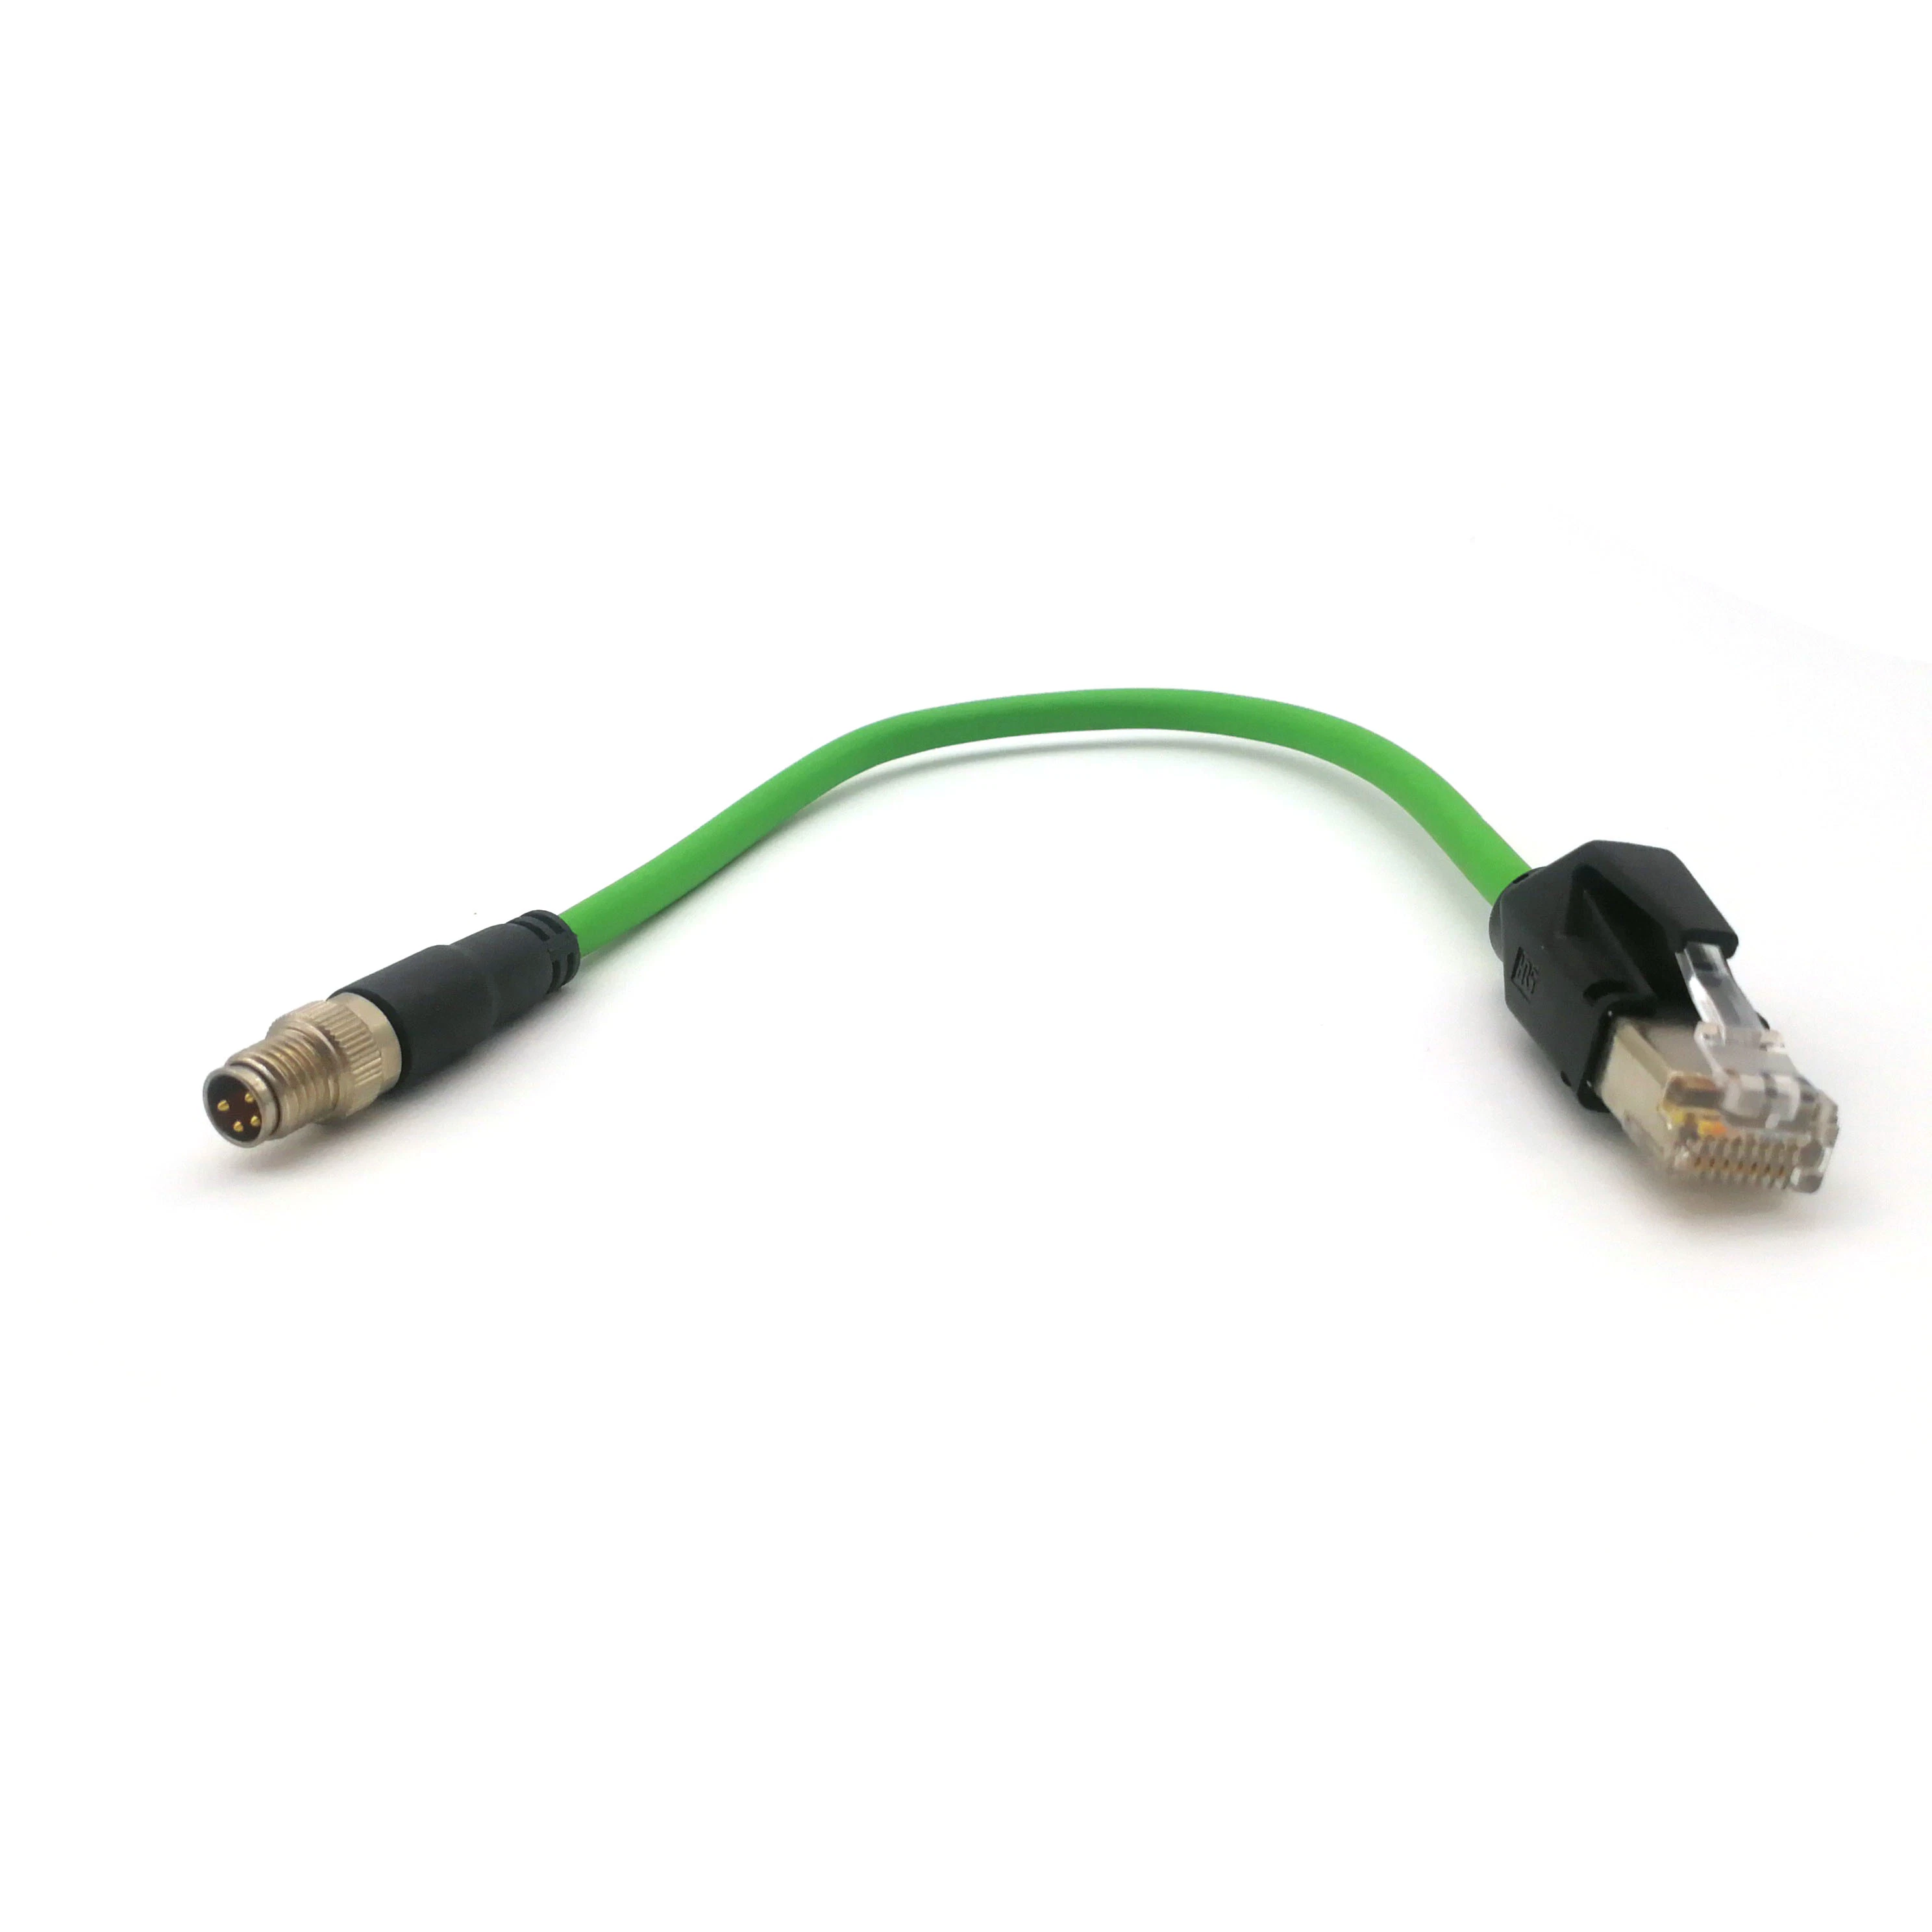 Profinet Cat. 5e M8 RJ45 Connection Cable with Shielding for Ethernet Ethercat